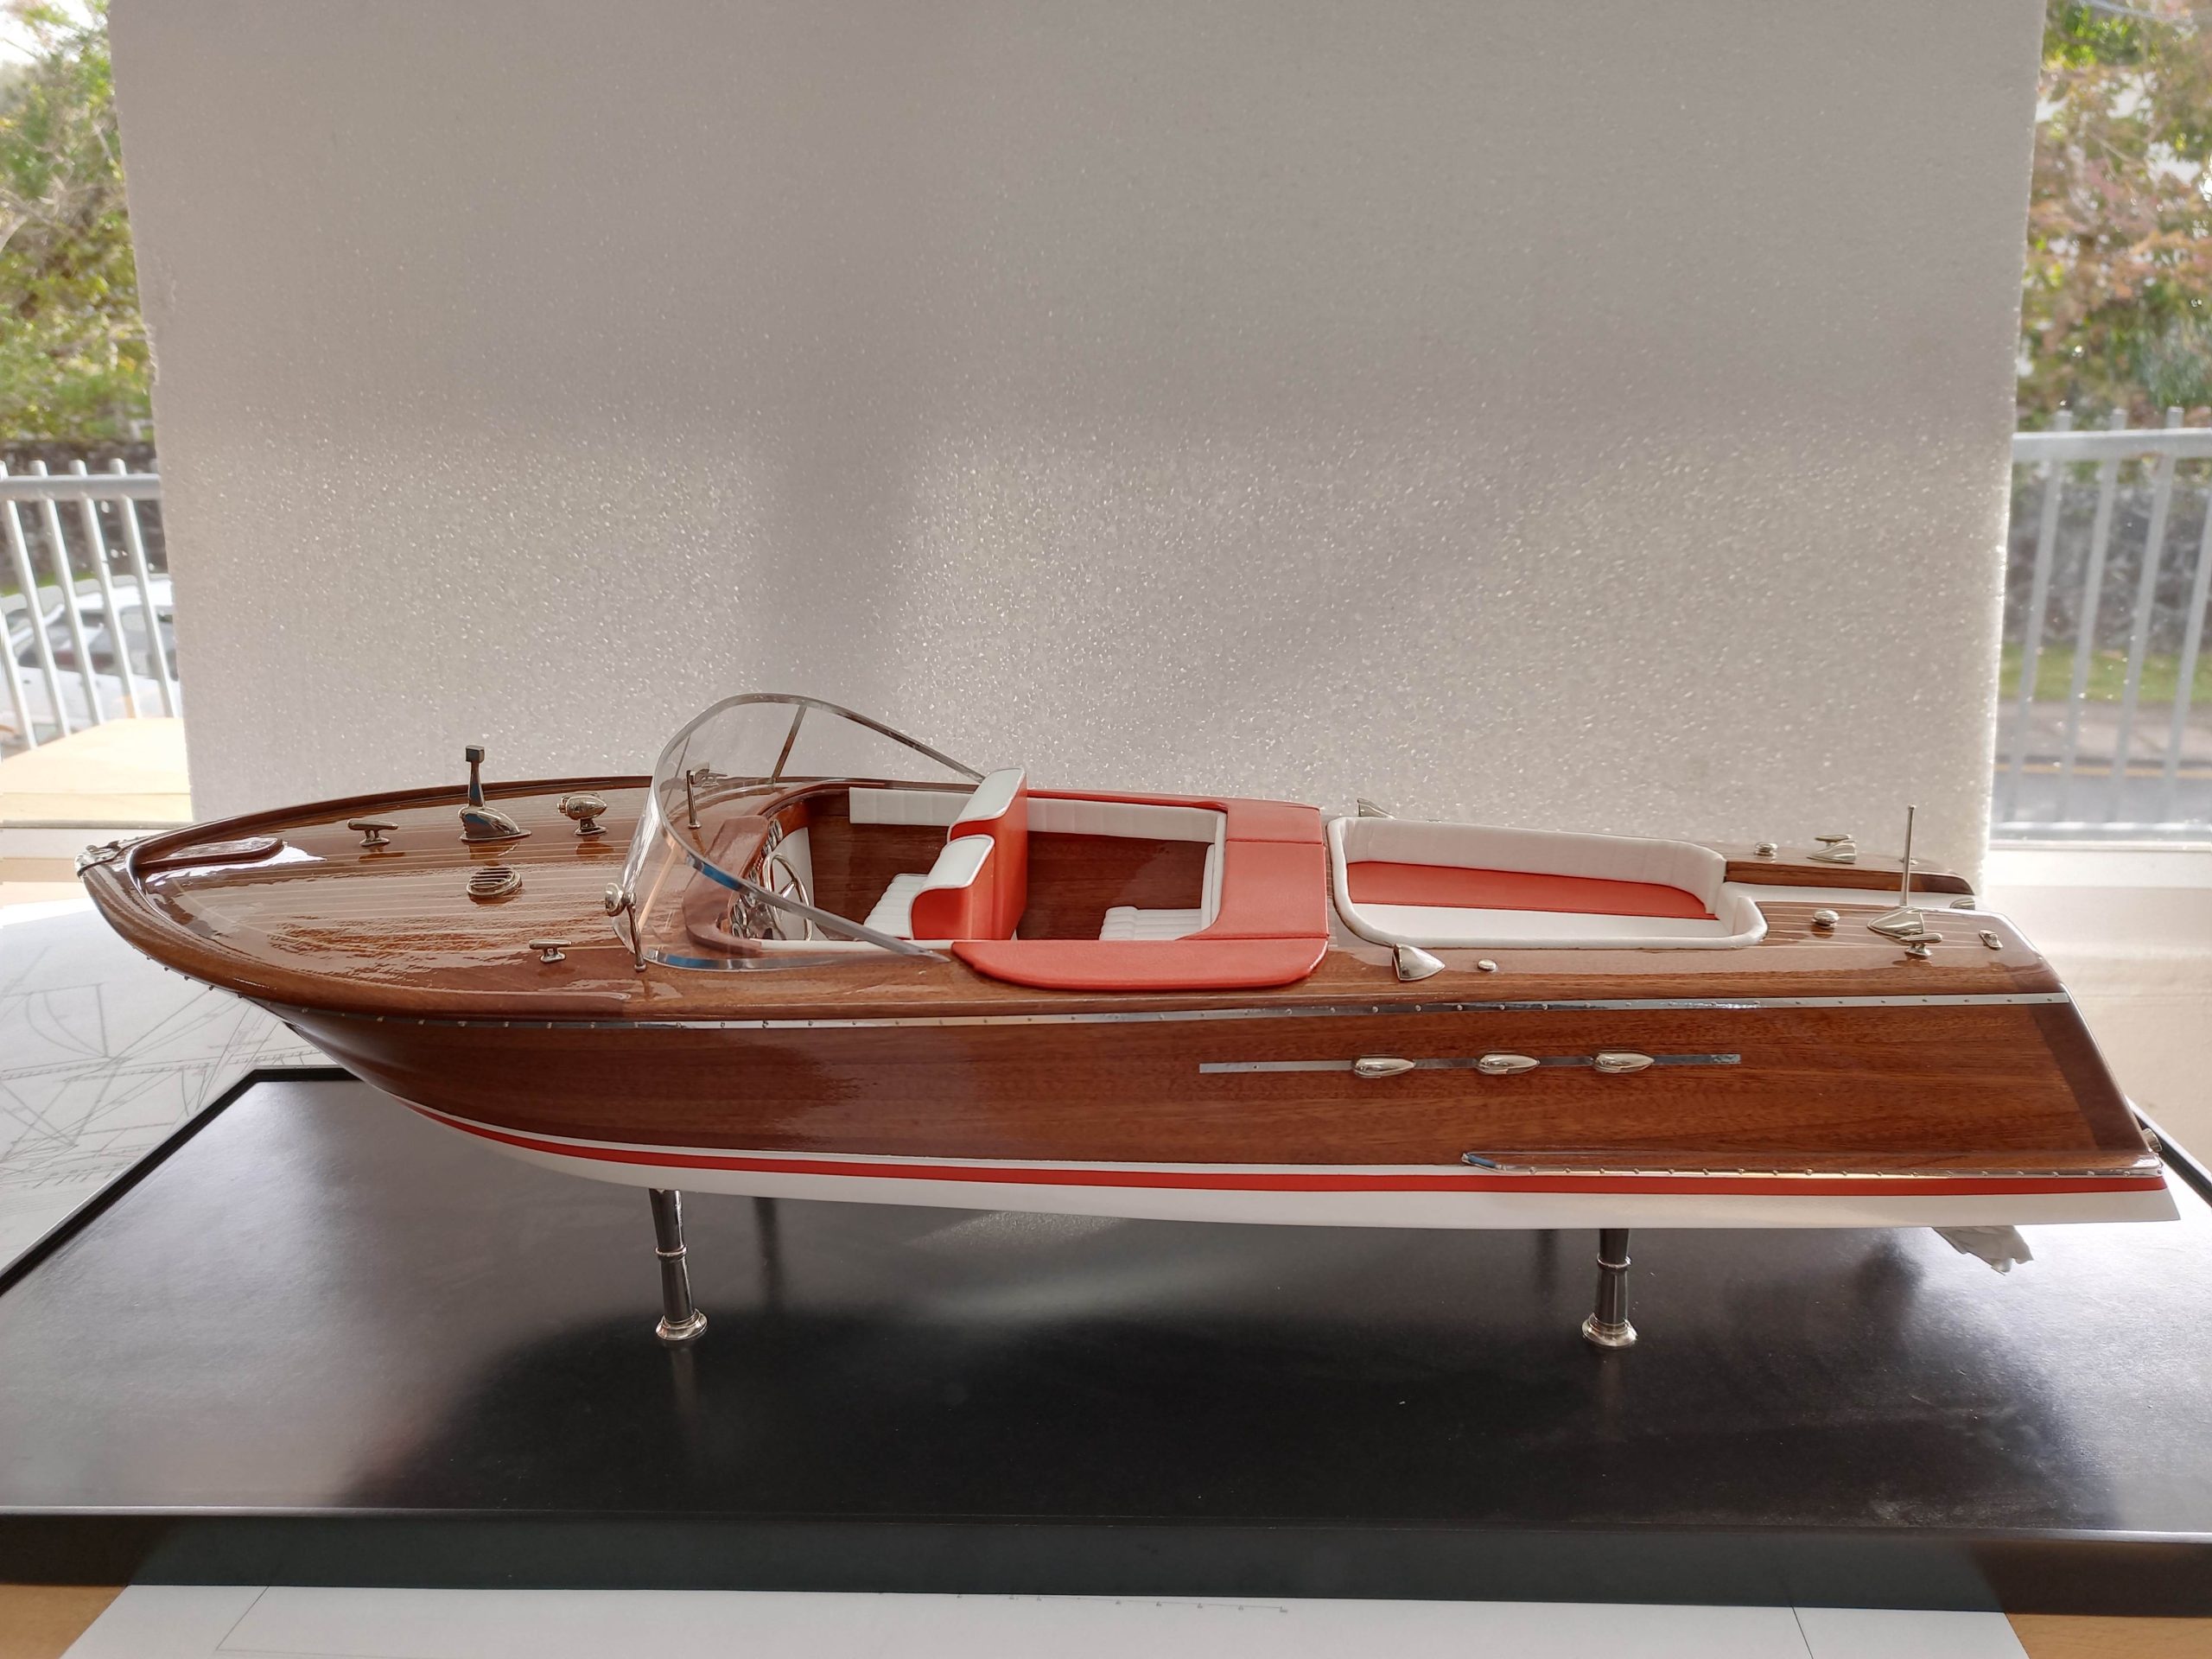 New Riva Aquarama 21" White-Blue Quality Wood Model Boat L50 Christmas Gift 